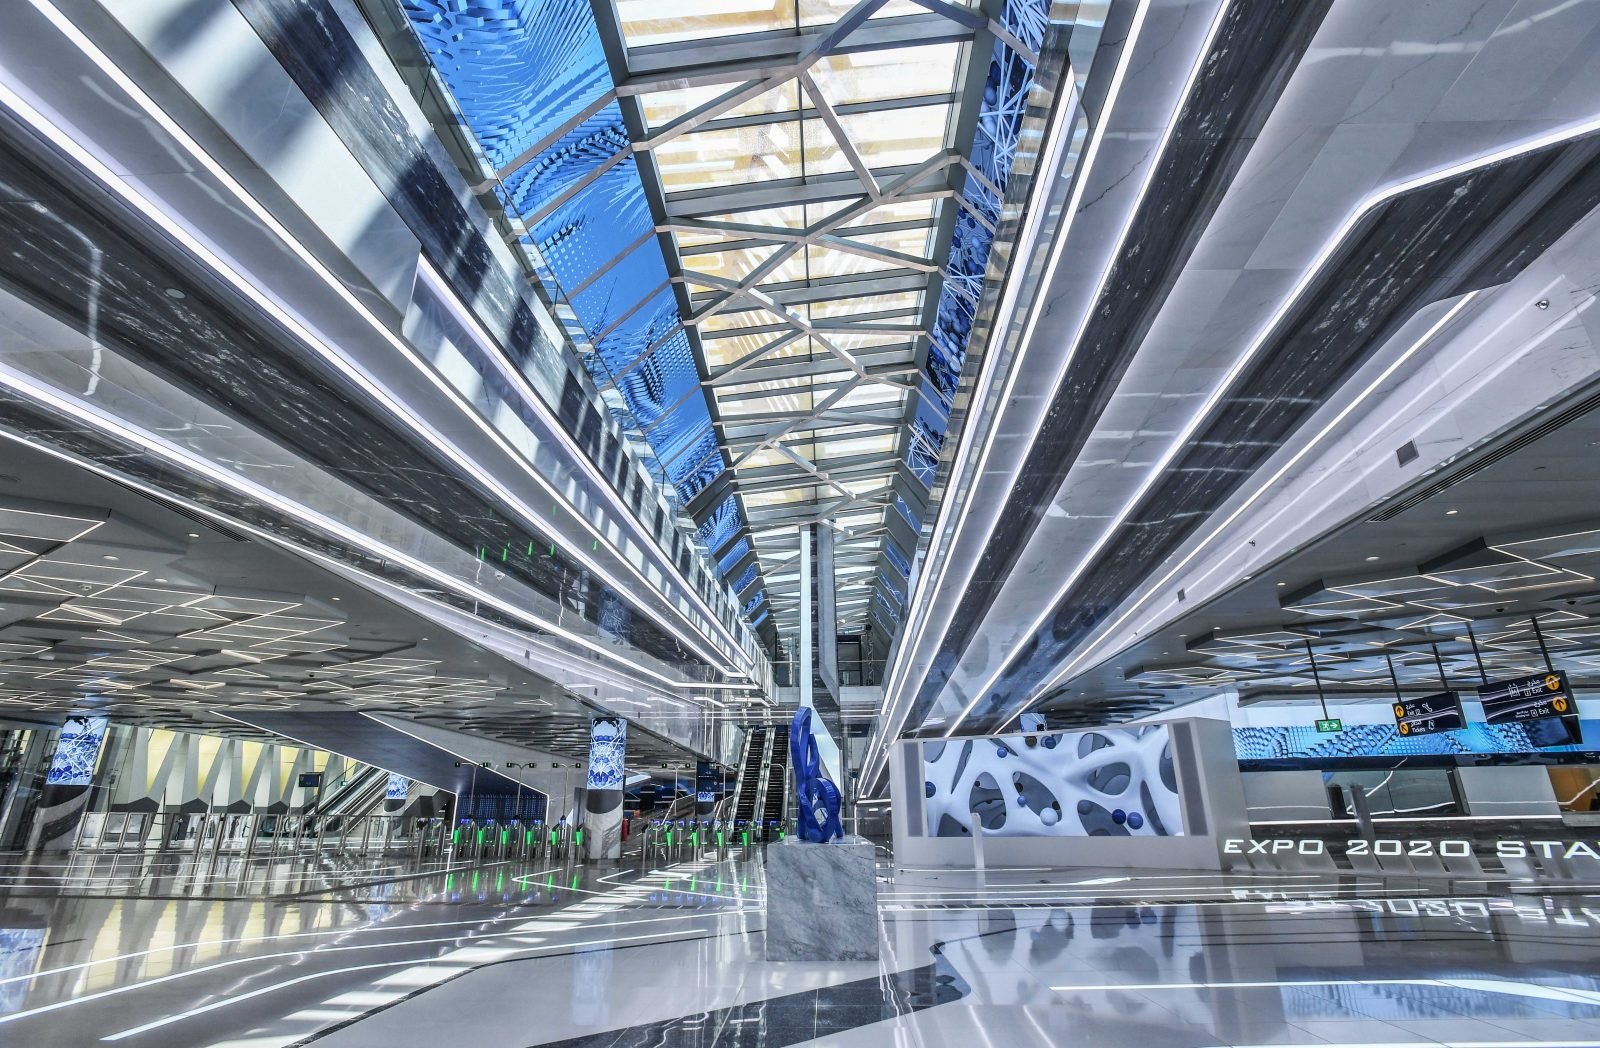 Dubai Metro's Expo 2020 station to open on June 1